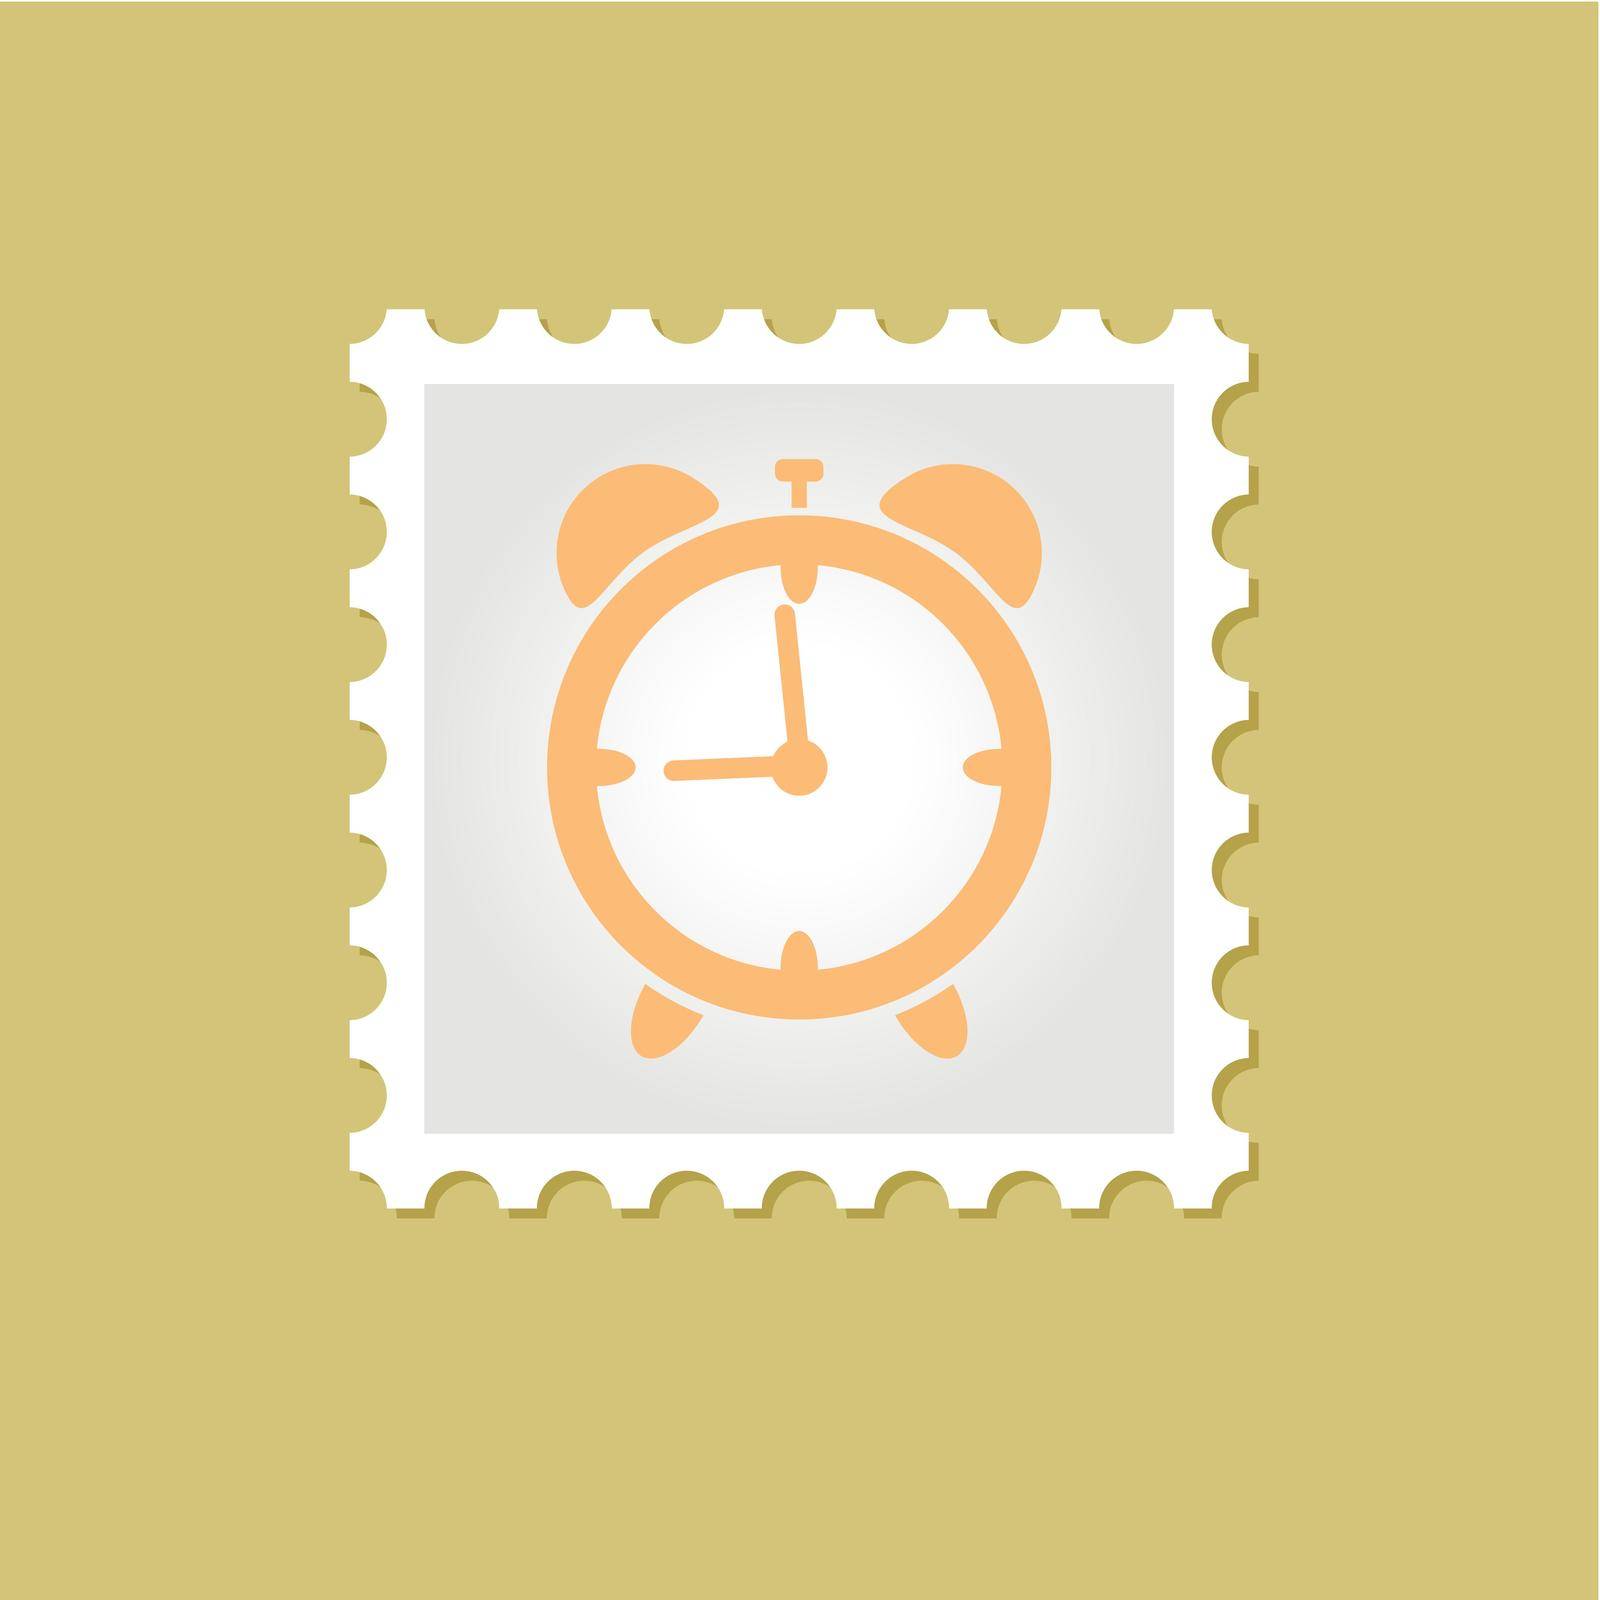 Alarm Clock vector stamp outline, eps 10